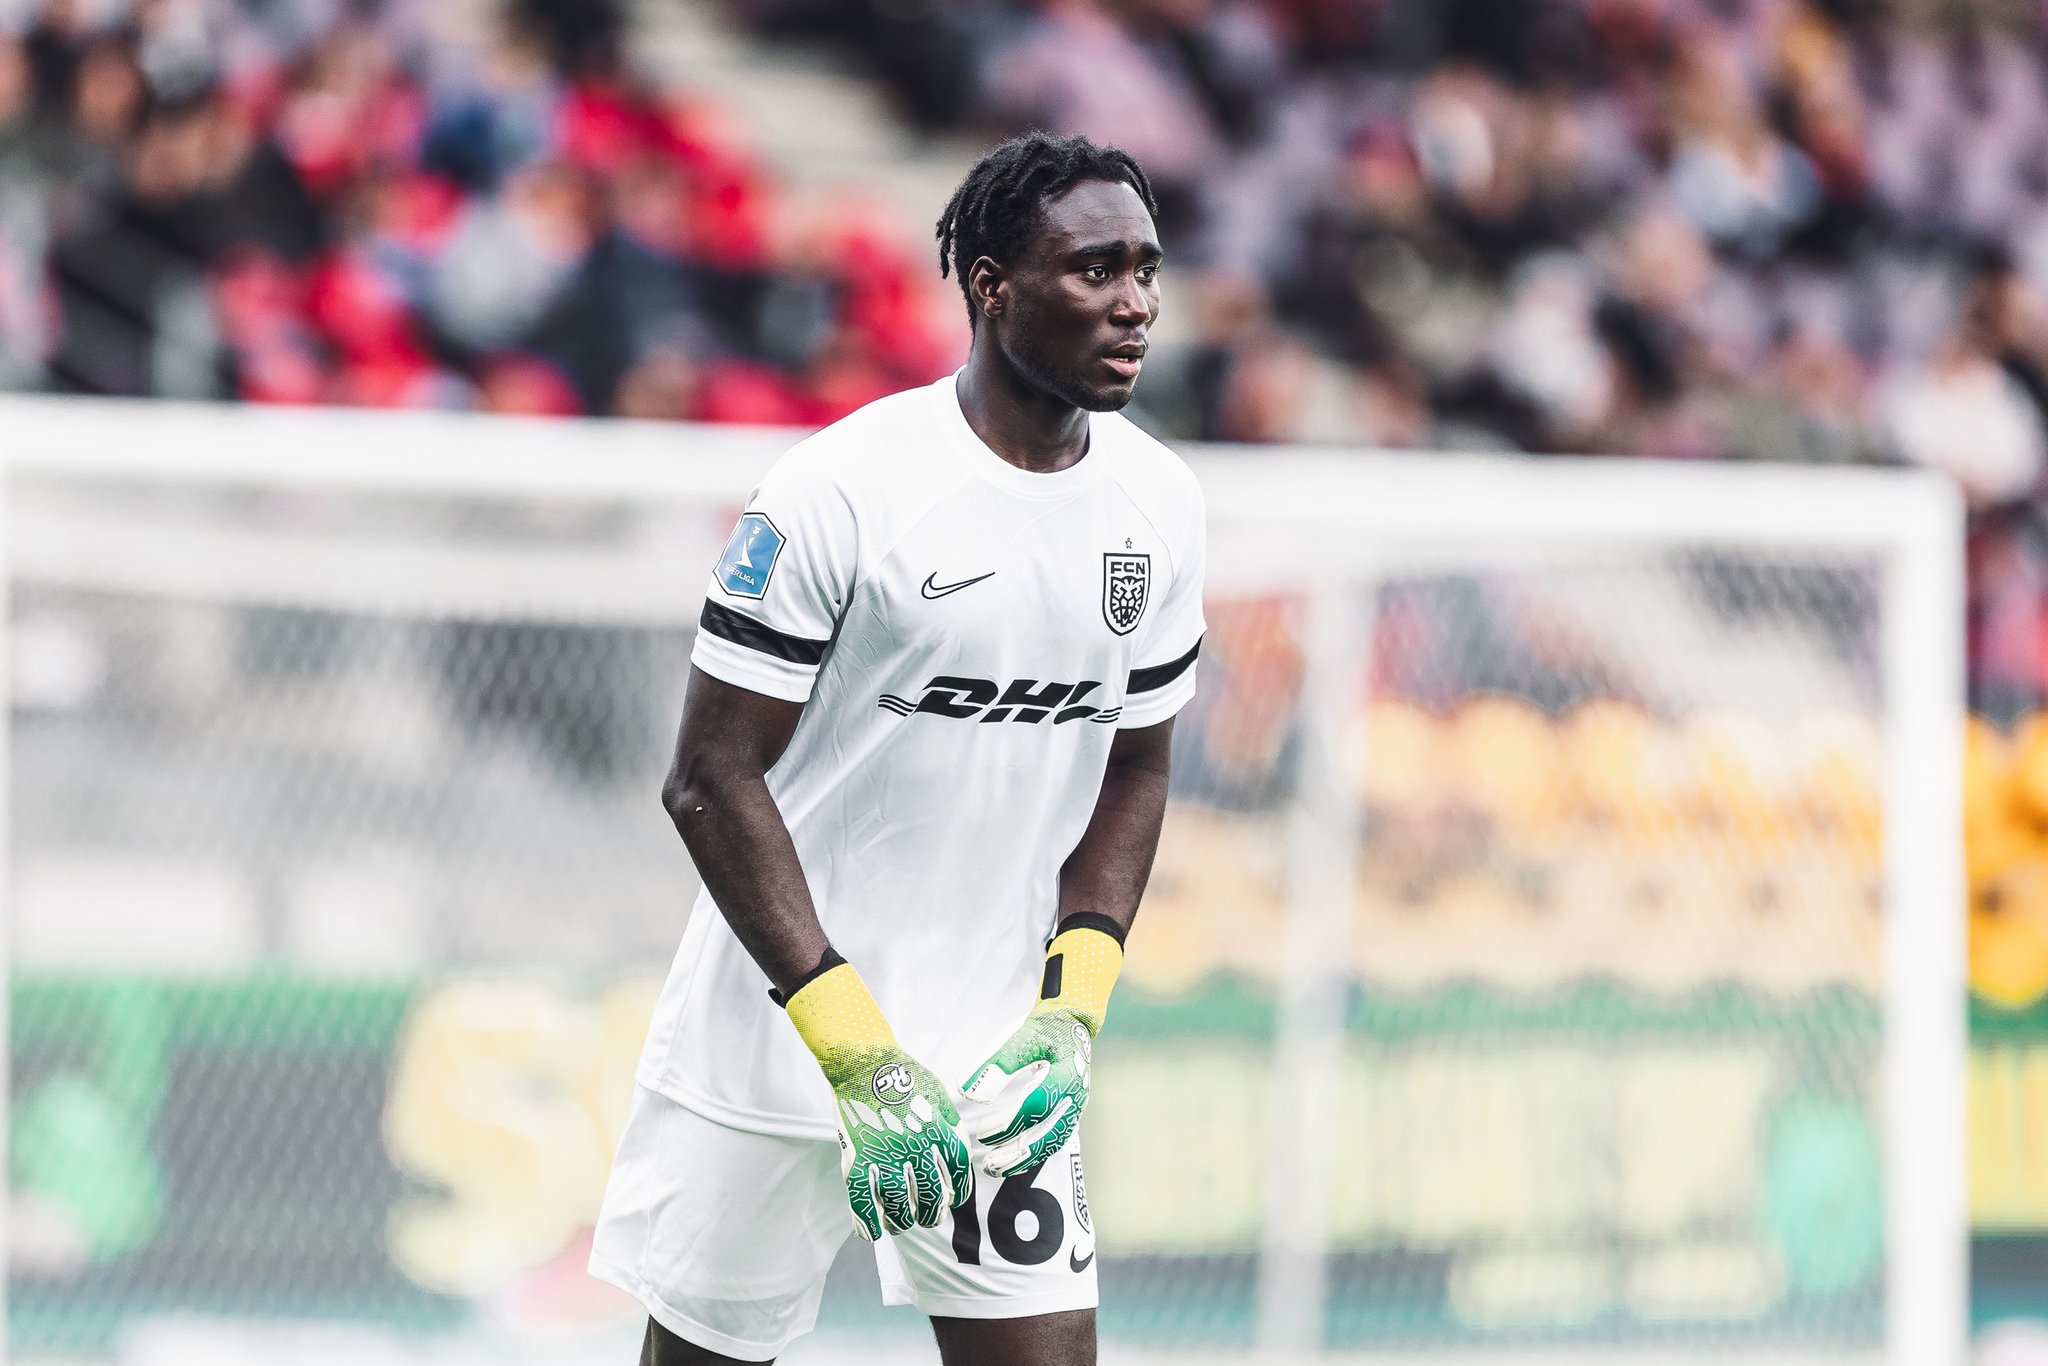 Ghanaian goalkeeper Emmanuel Ogura scores own goal in Hellerup’s loss to Brøndby